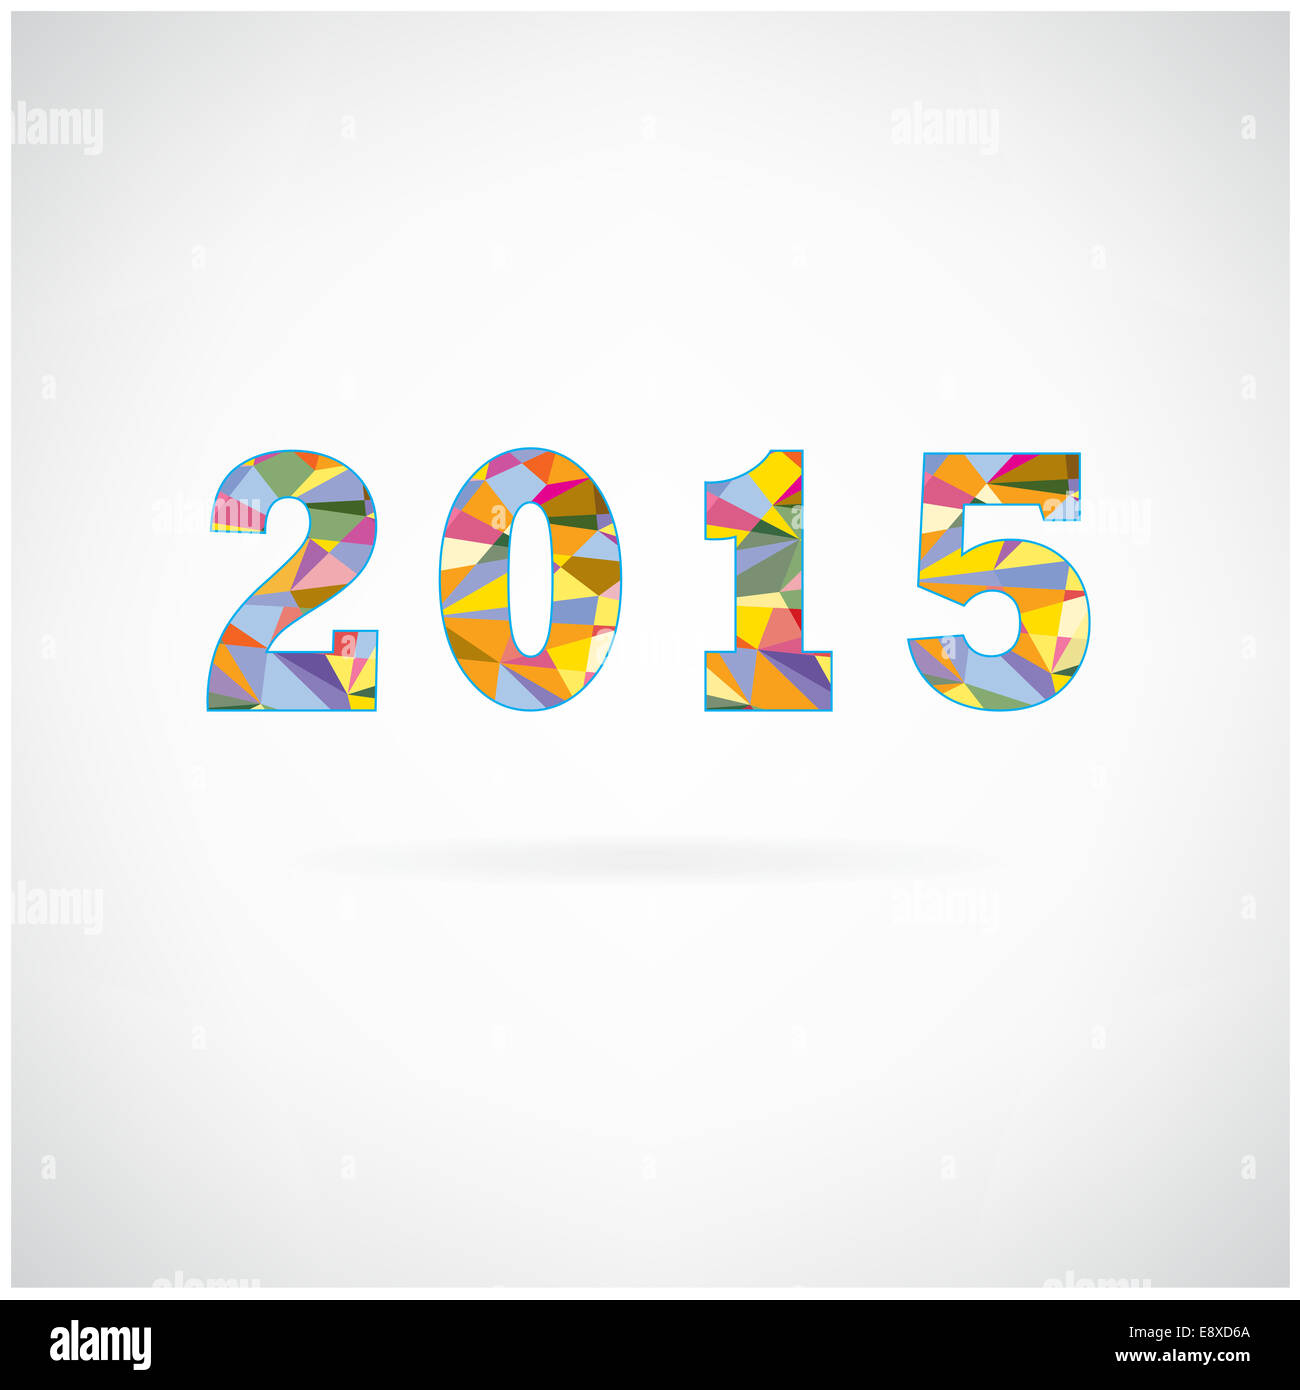 Creative happy new year 2015 text Design. Stock Photo